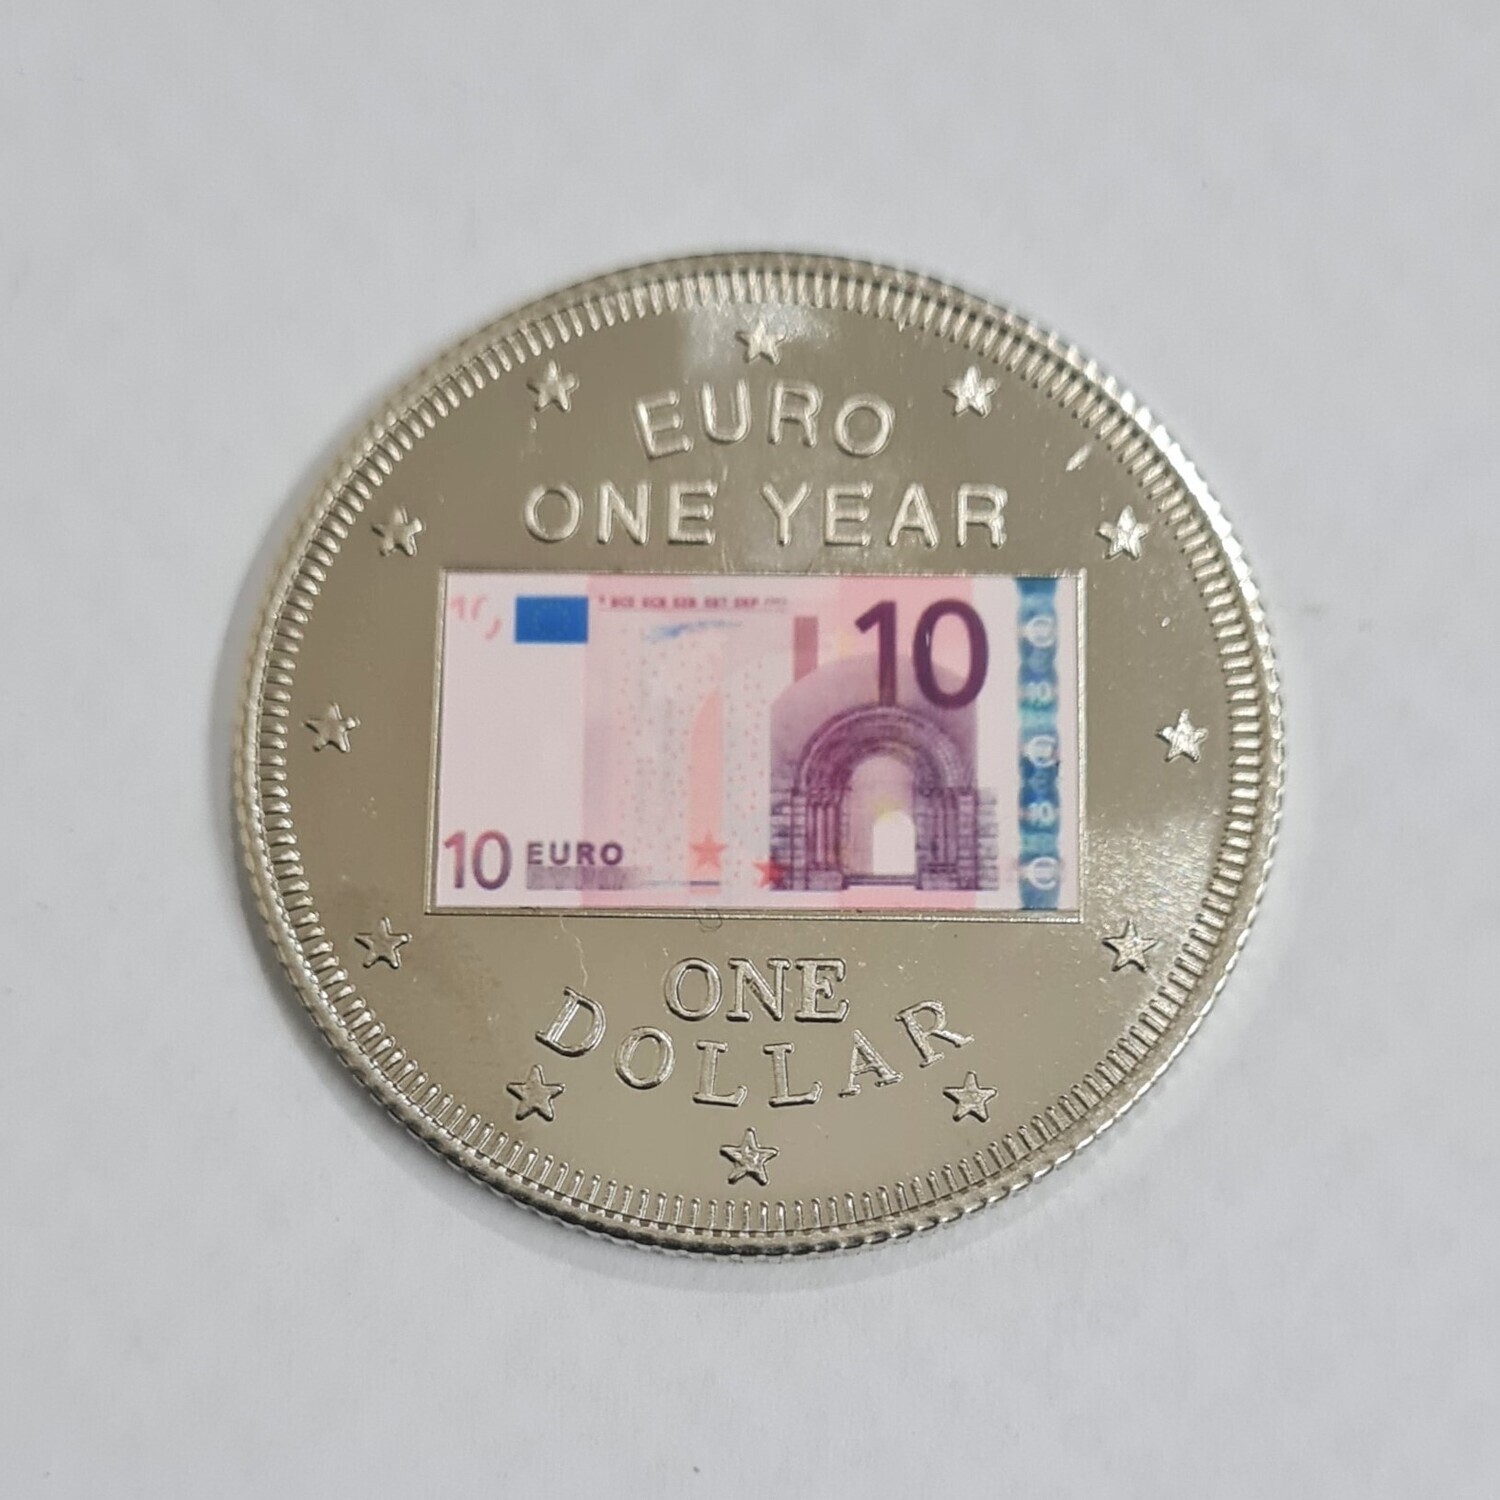 COOK ISLAND-1 DOLLAR- Elizabeth II -1st Anniversary of the euro-Colour